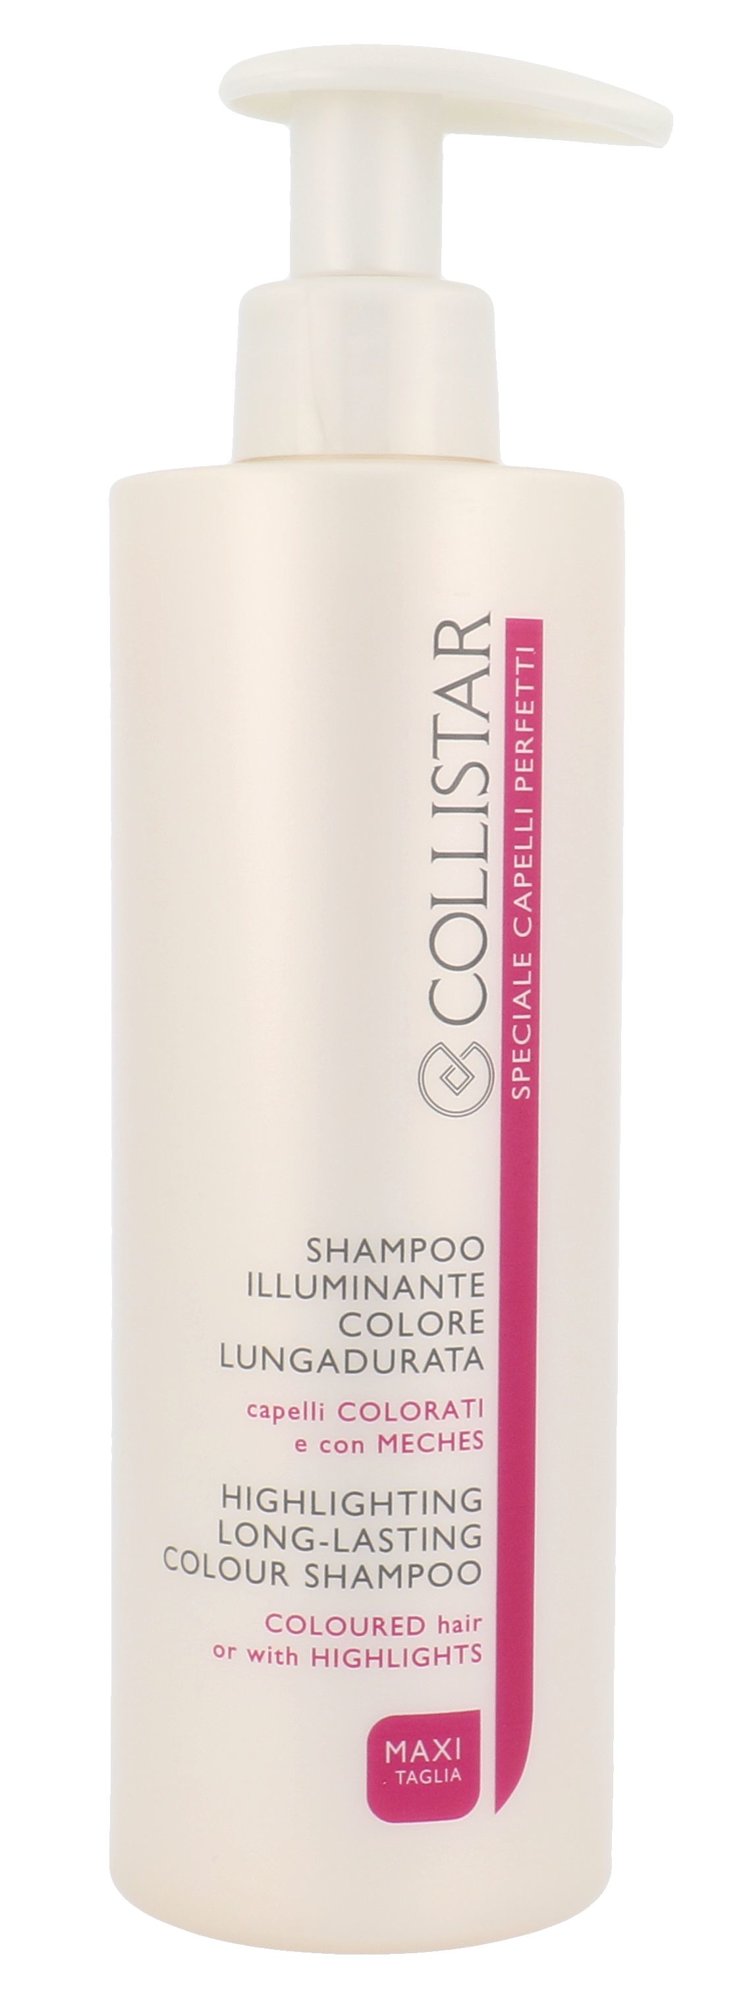 Collistar Long-Lasting Colour Highlighting šampūnas